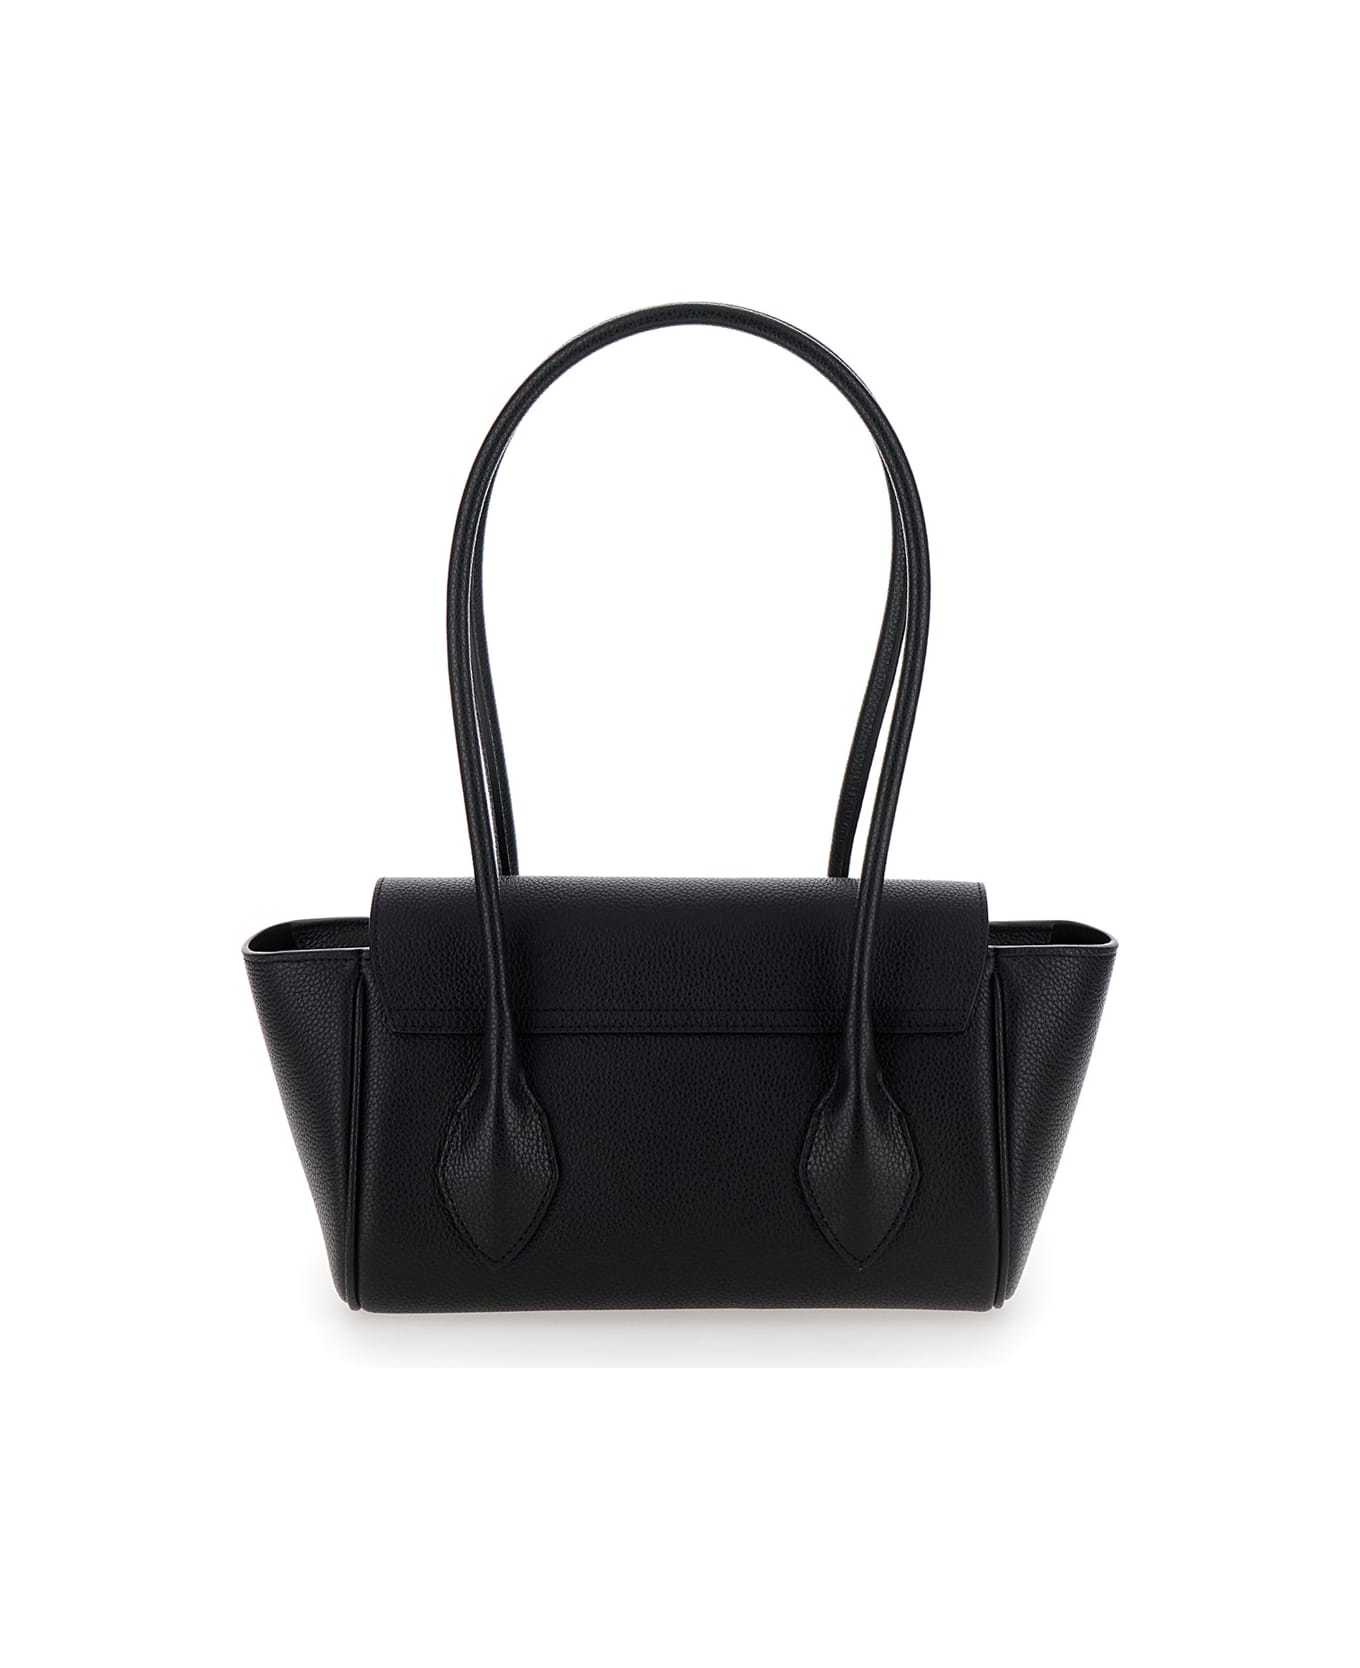 Ferragamo 'east-west S' Black Handbag With Logo Detail In Hammered Leather Woman - Black